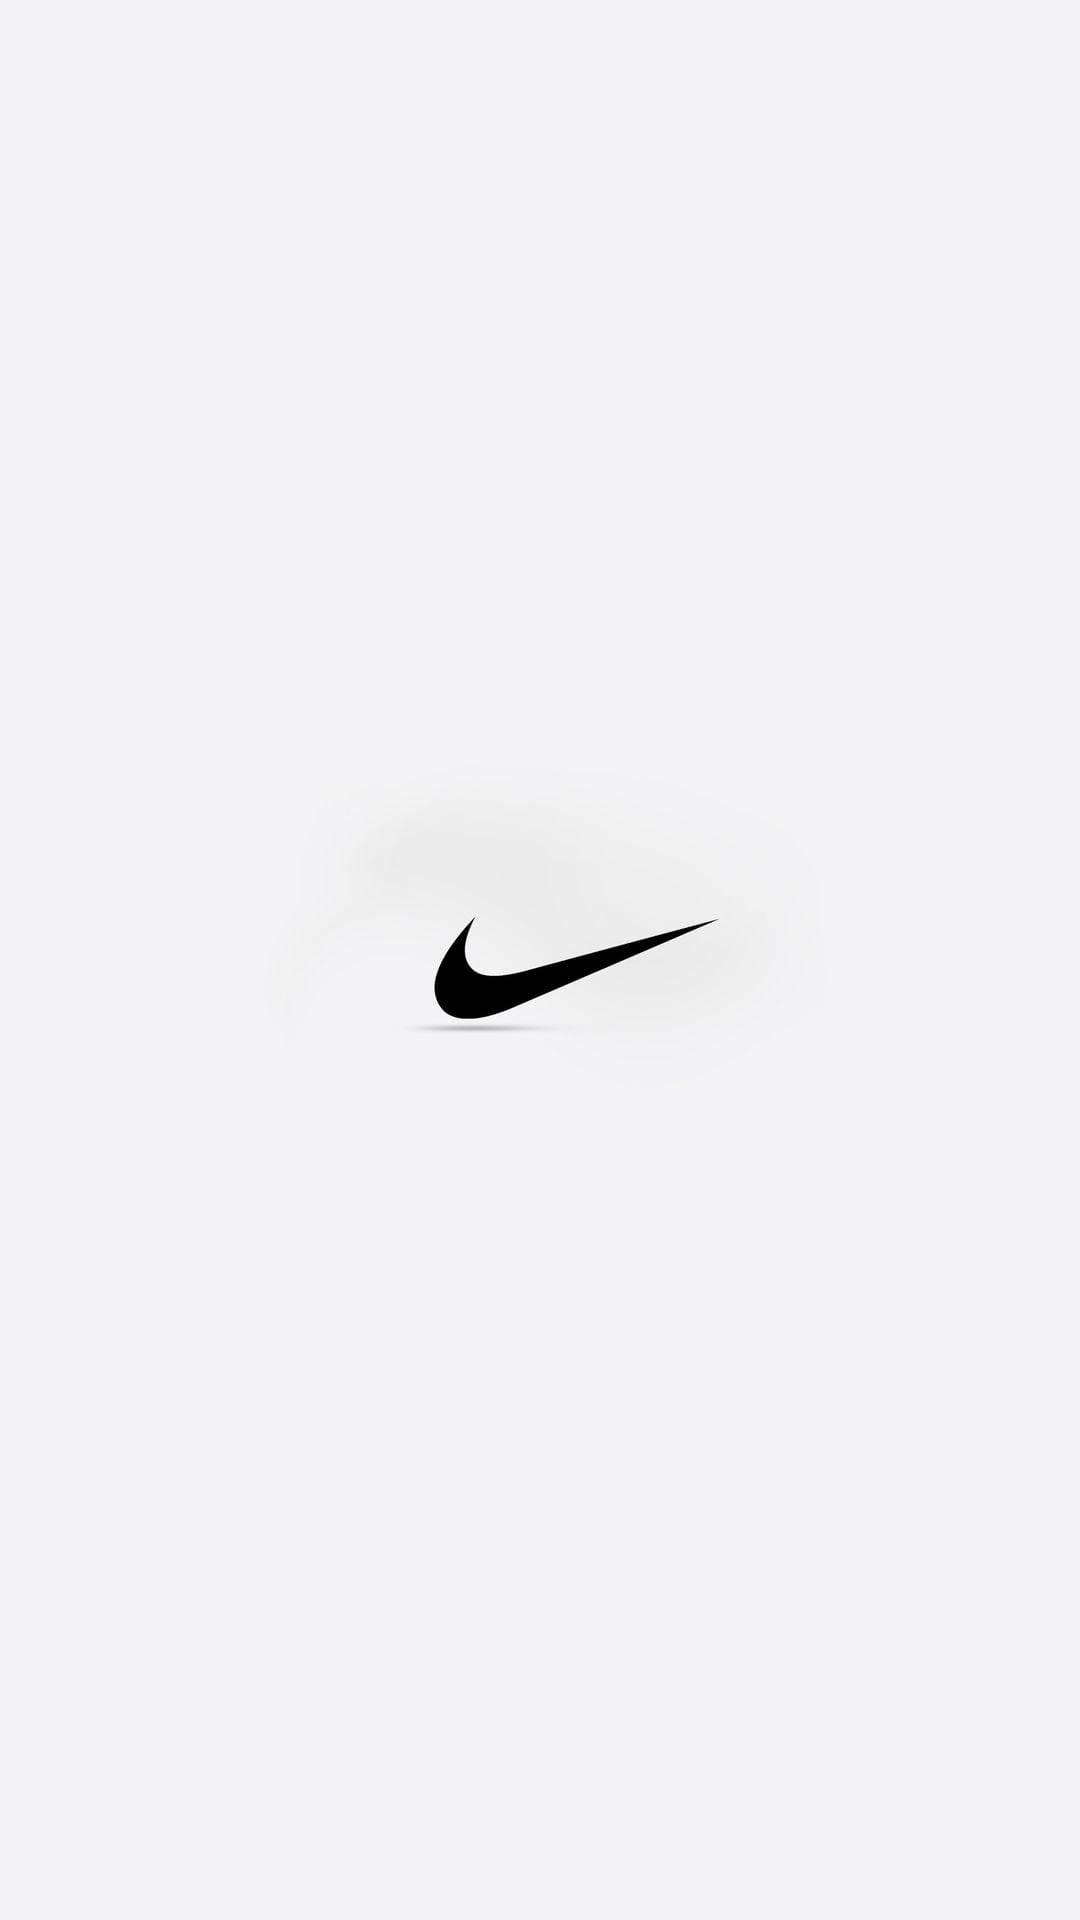 Download Cool White Nike Wallpaper